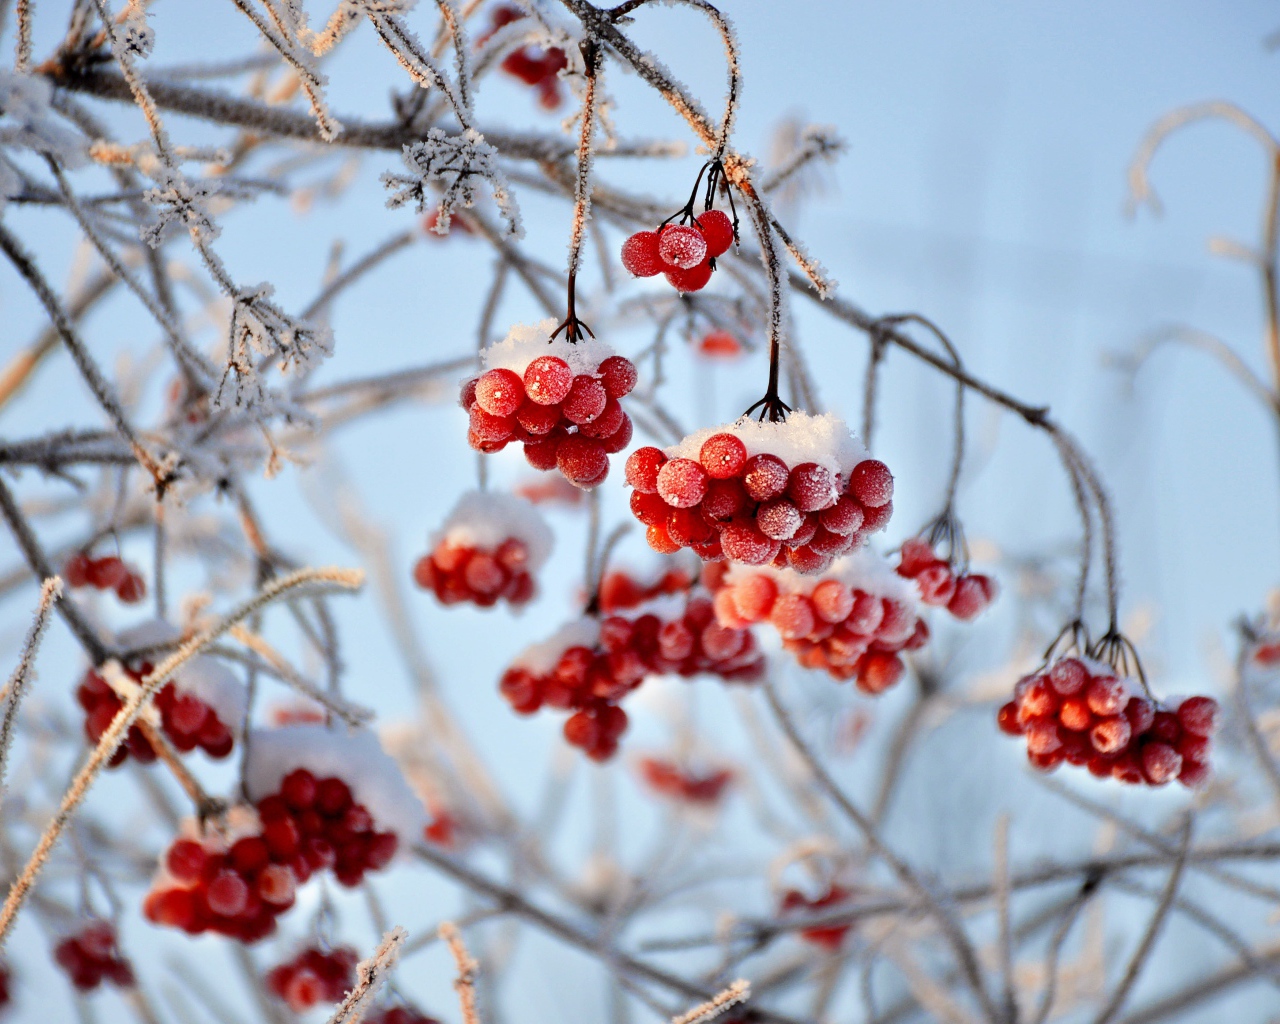 Red viburnum berries in white hoarfrost